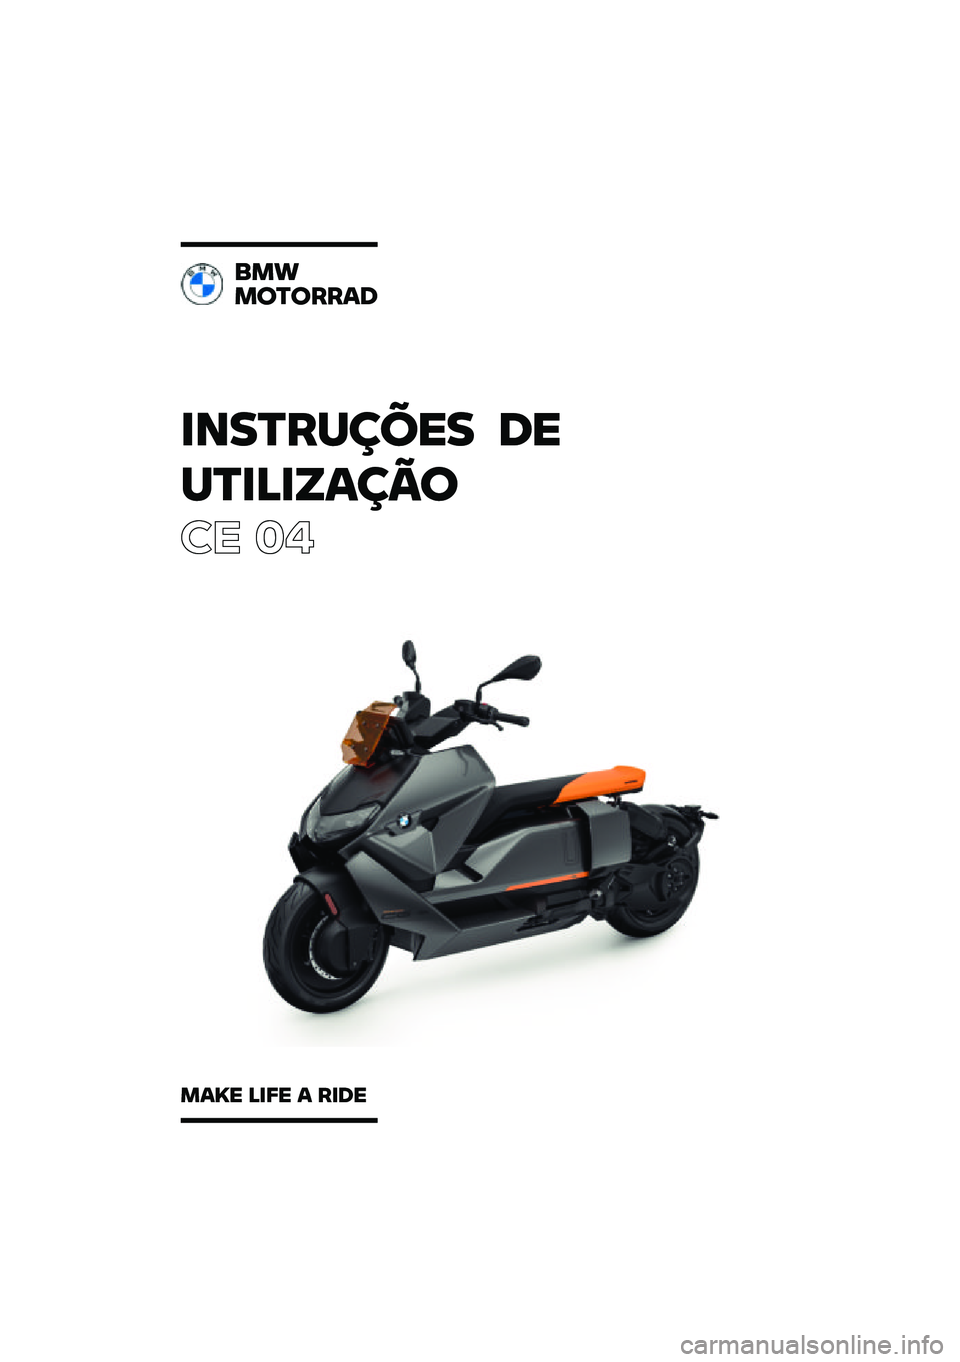 BMW MOTORRAD CE 04 2021  Manual do condutor (in Portuguese) �������\b�	�\f� �
�\f
��������\b��

�� ��
���
��
��
����
����\f ����\f � ���
�\f 